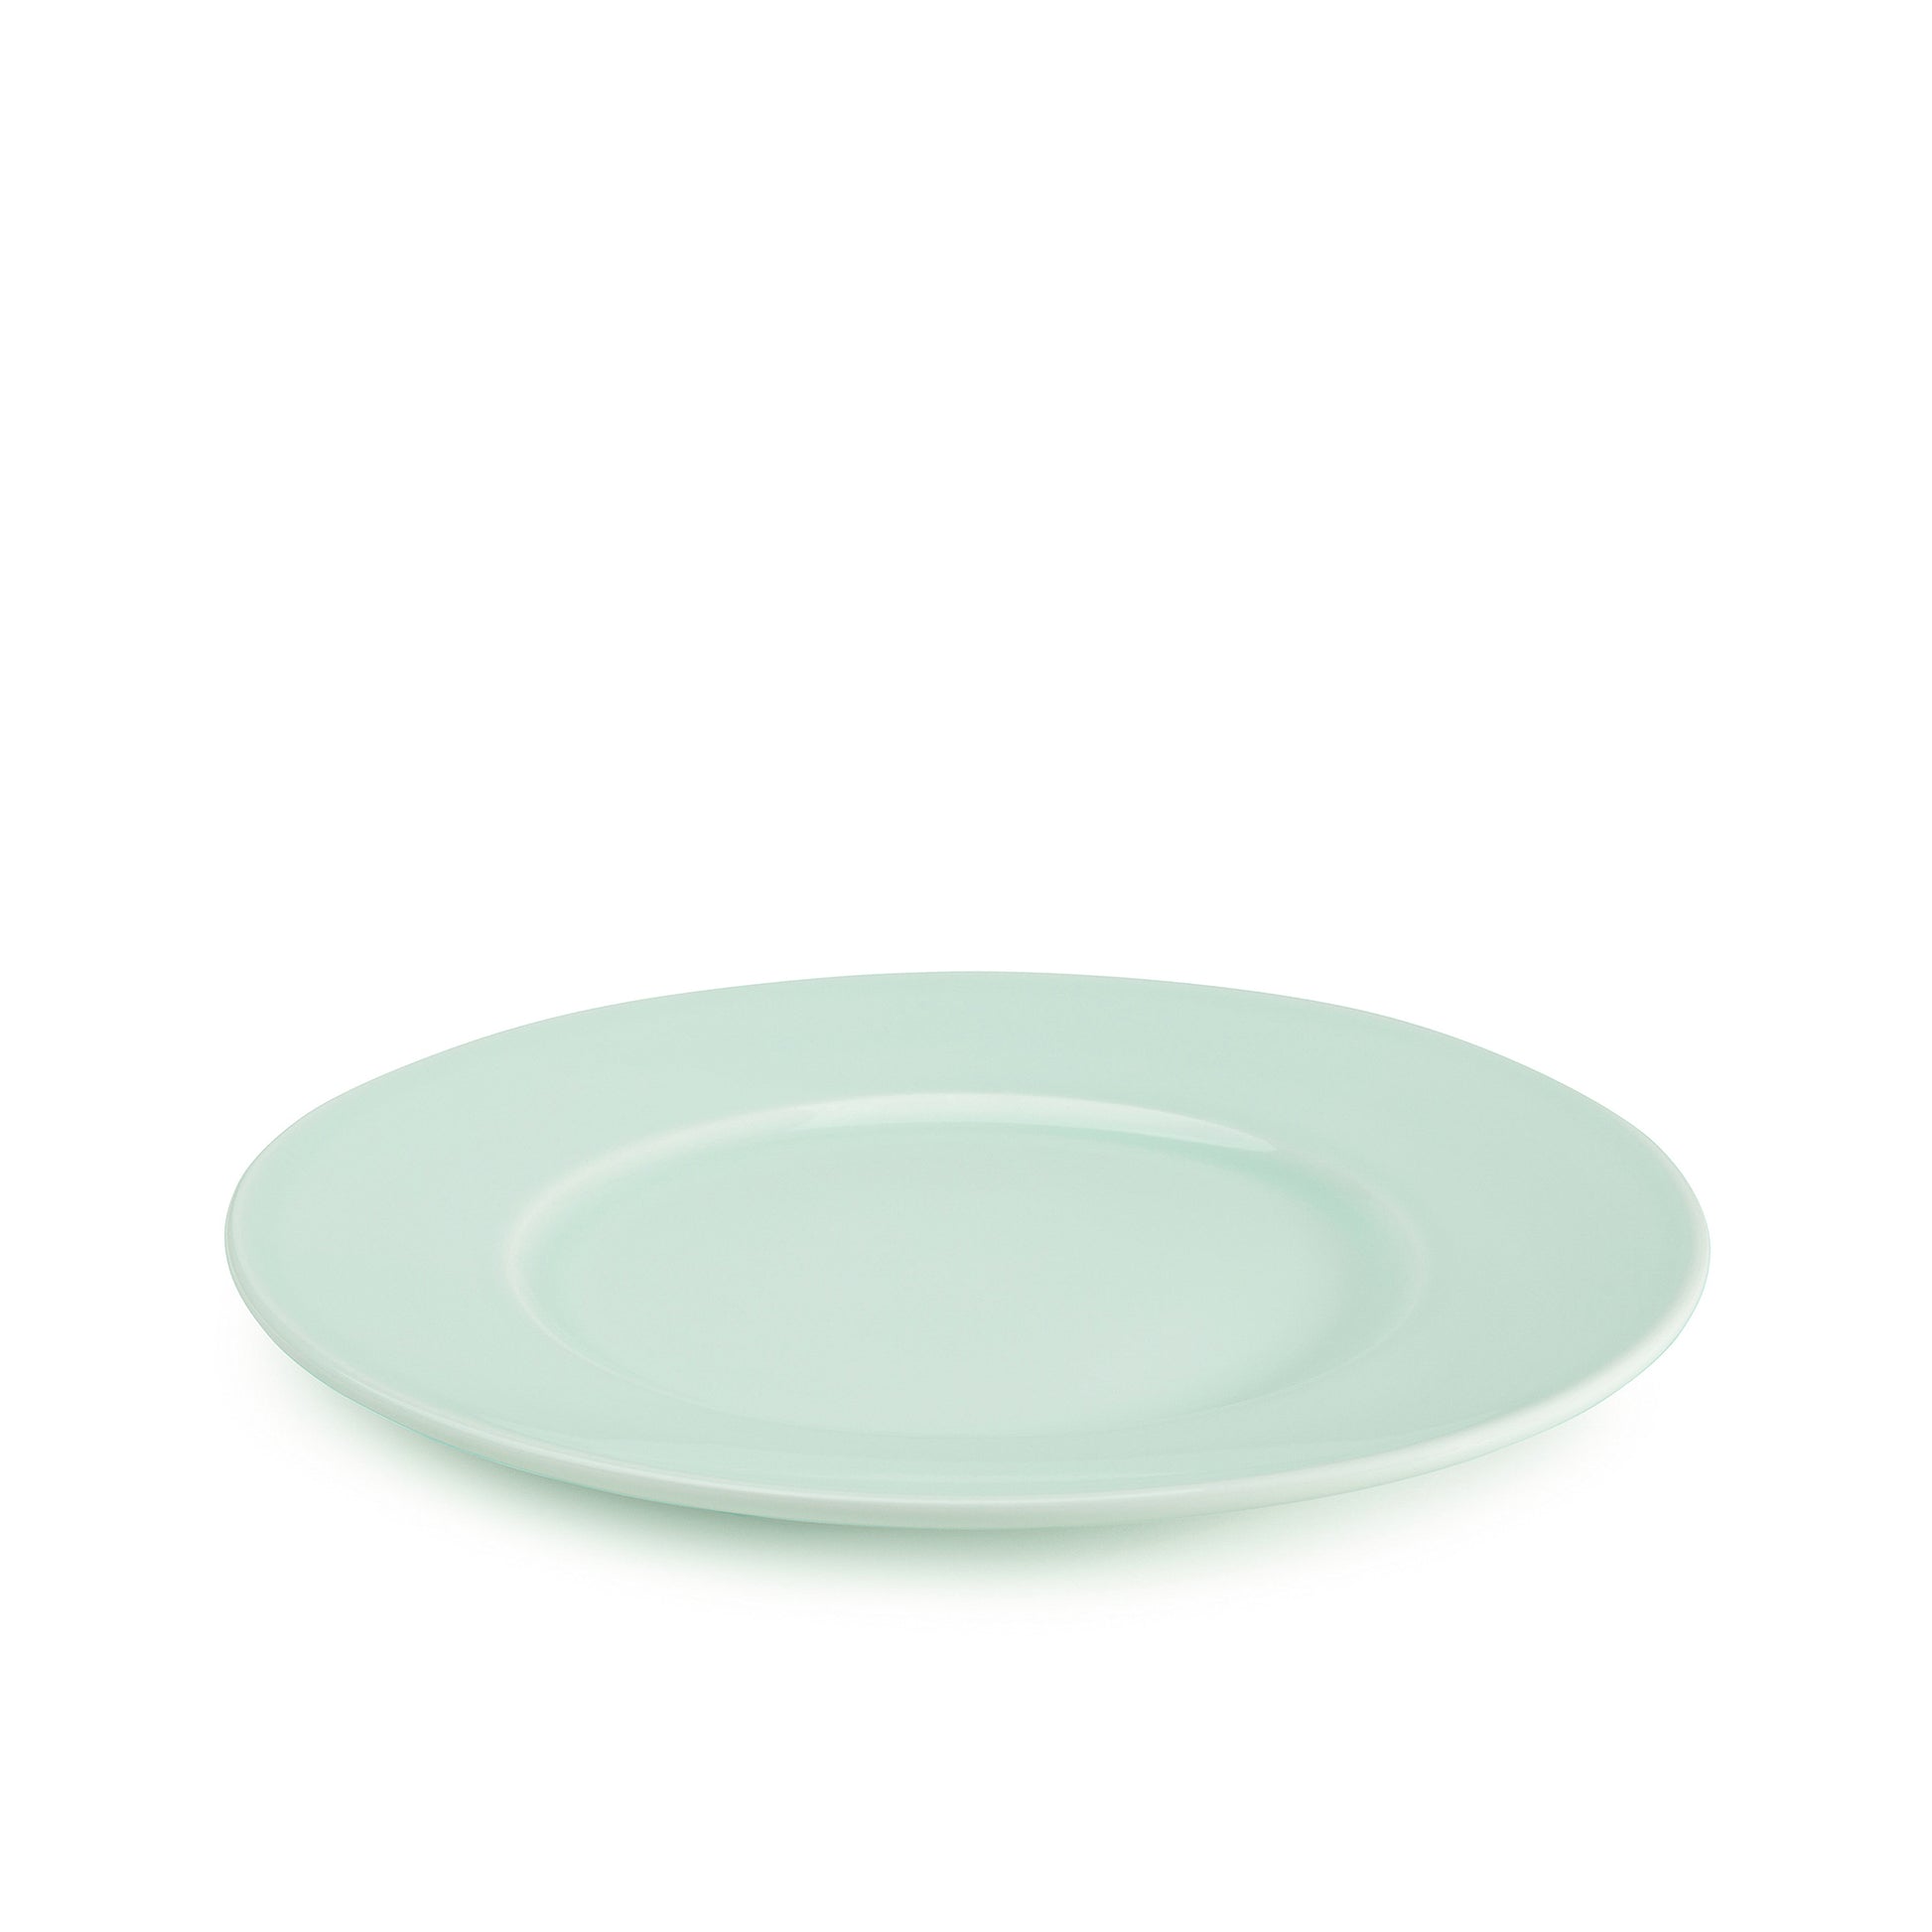 11 3/4" green celadon porcelain dinner plate, 30 degree angle view, media 1 of 4